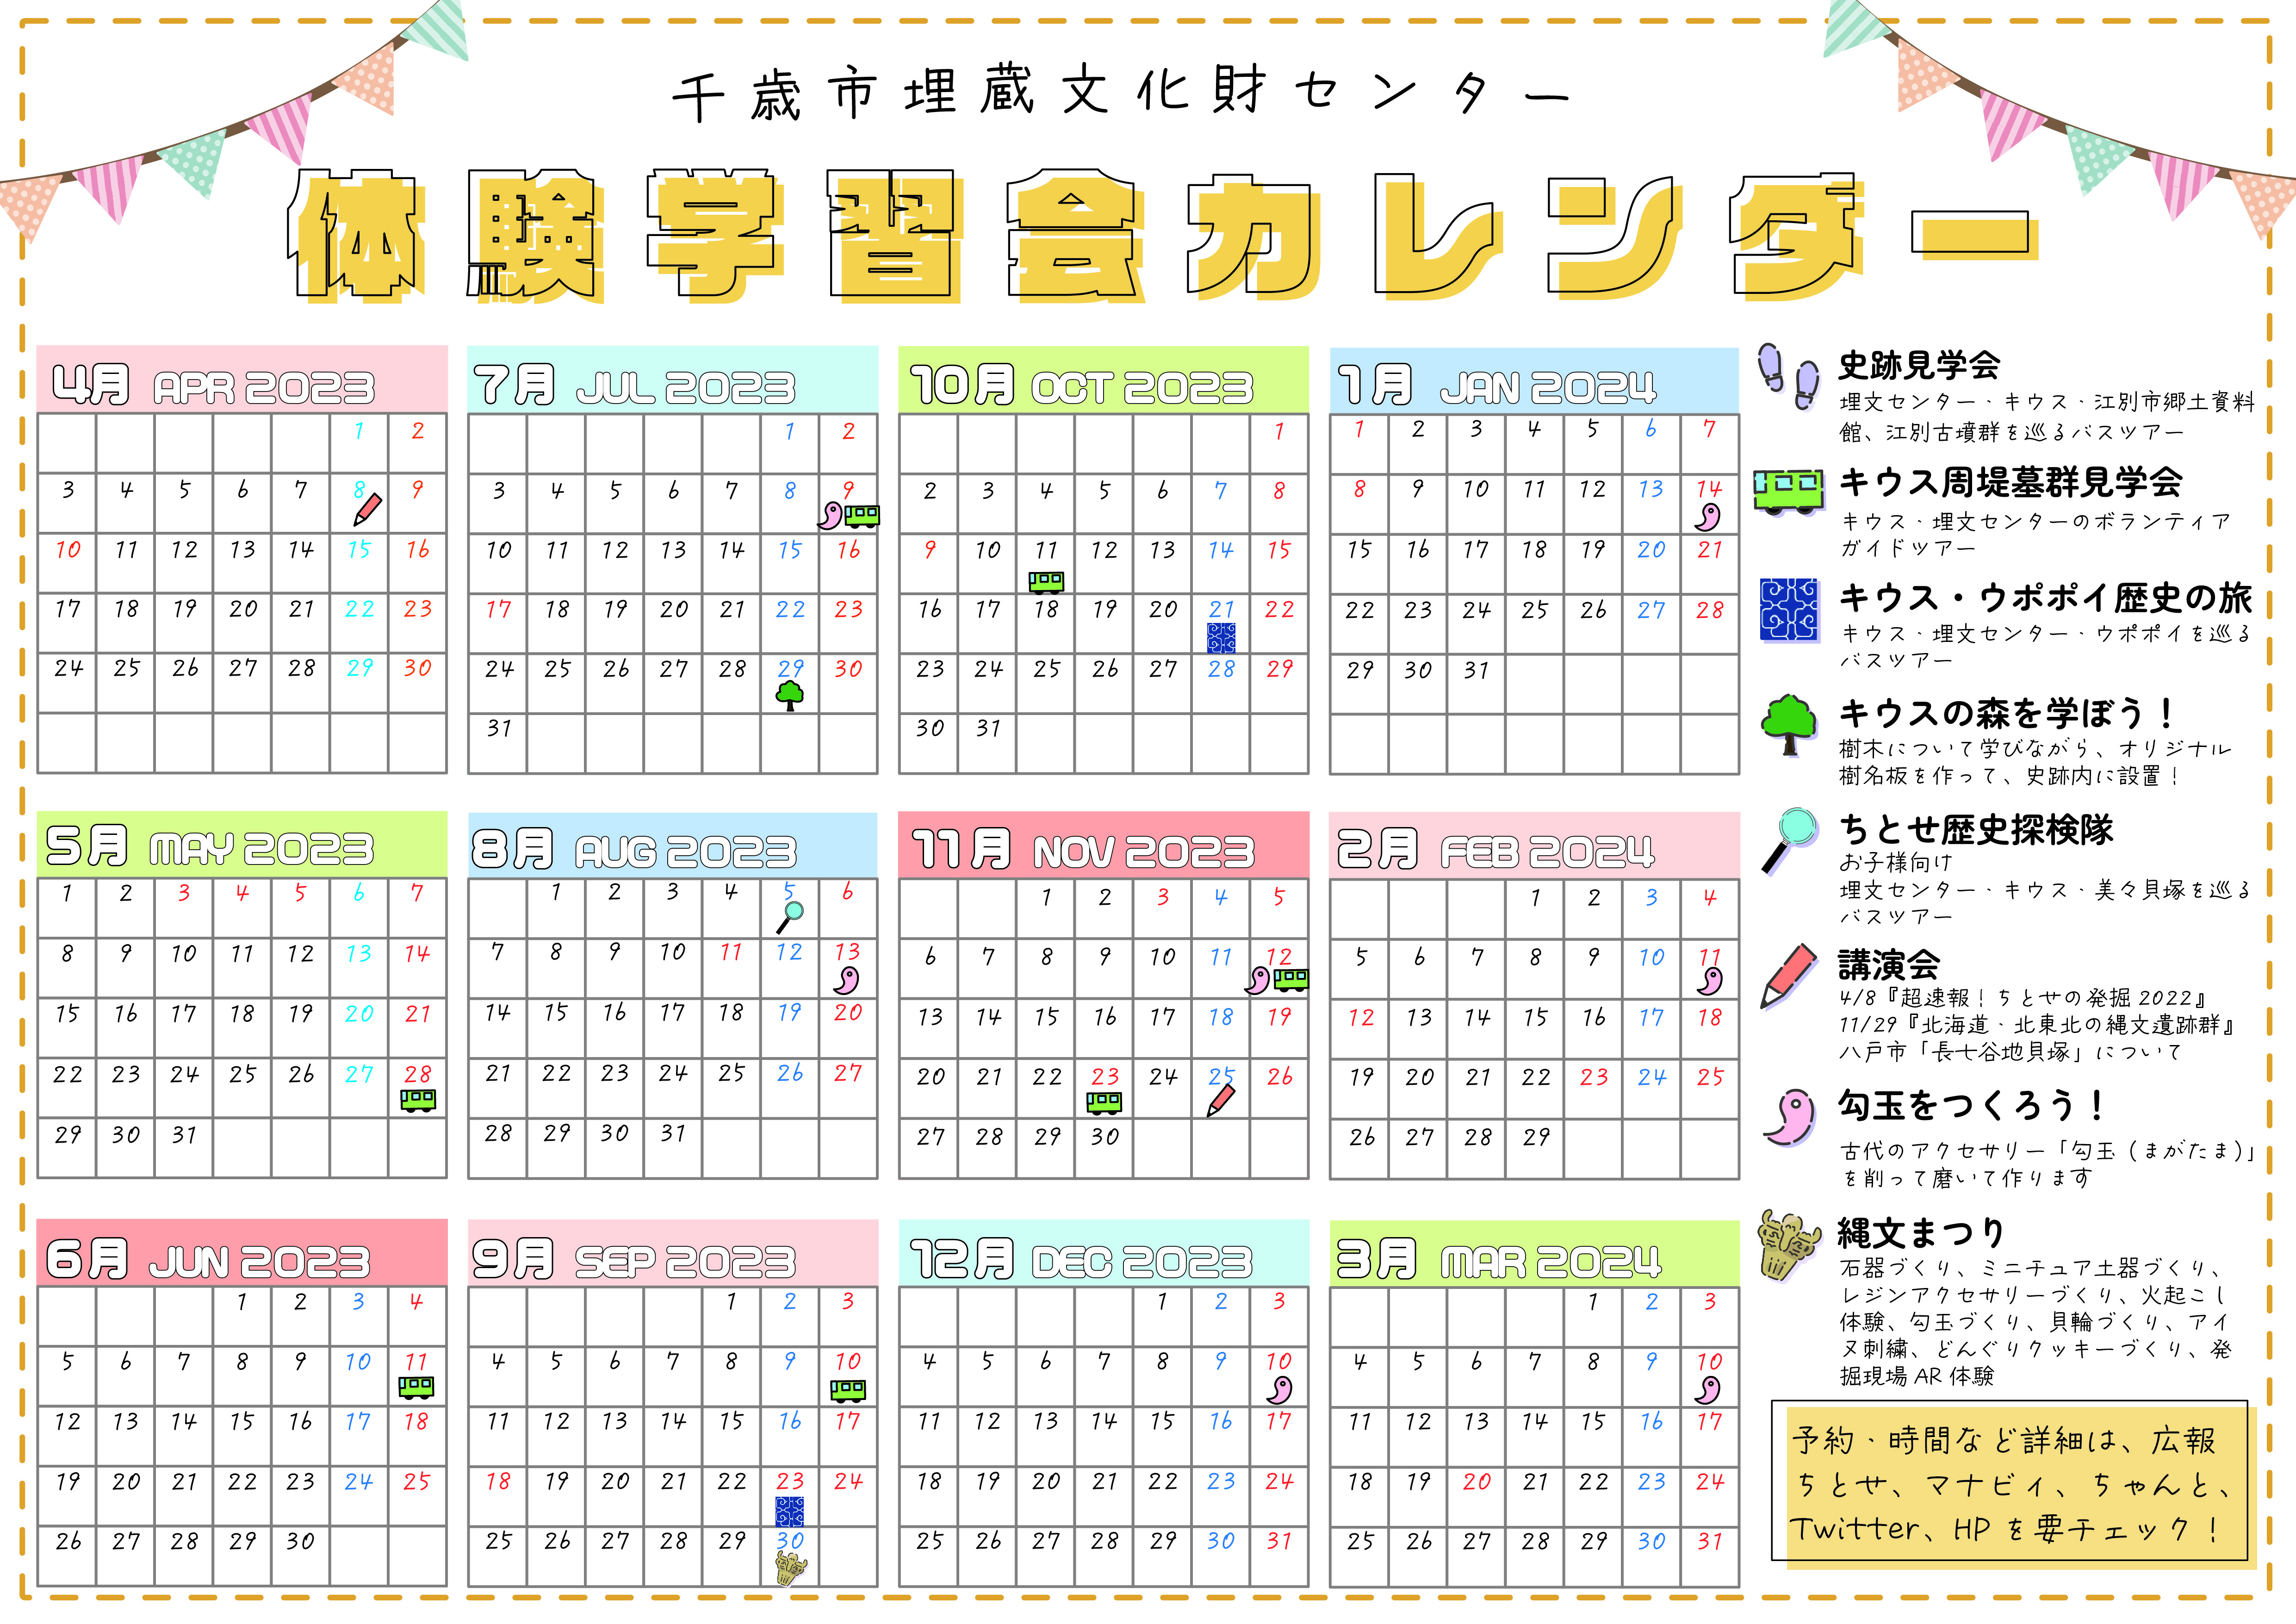 R5体験学習会カレンダー-01.jpg